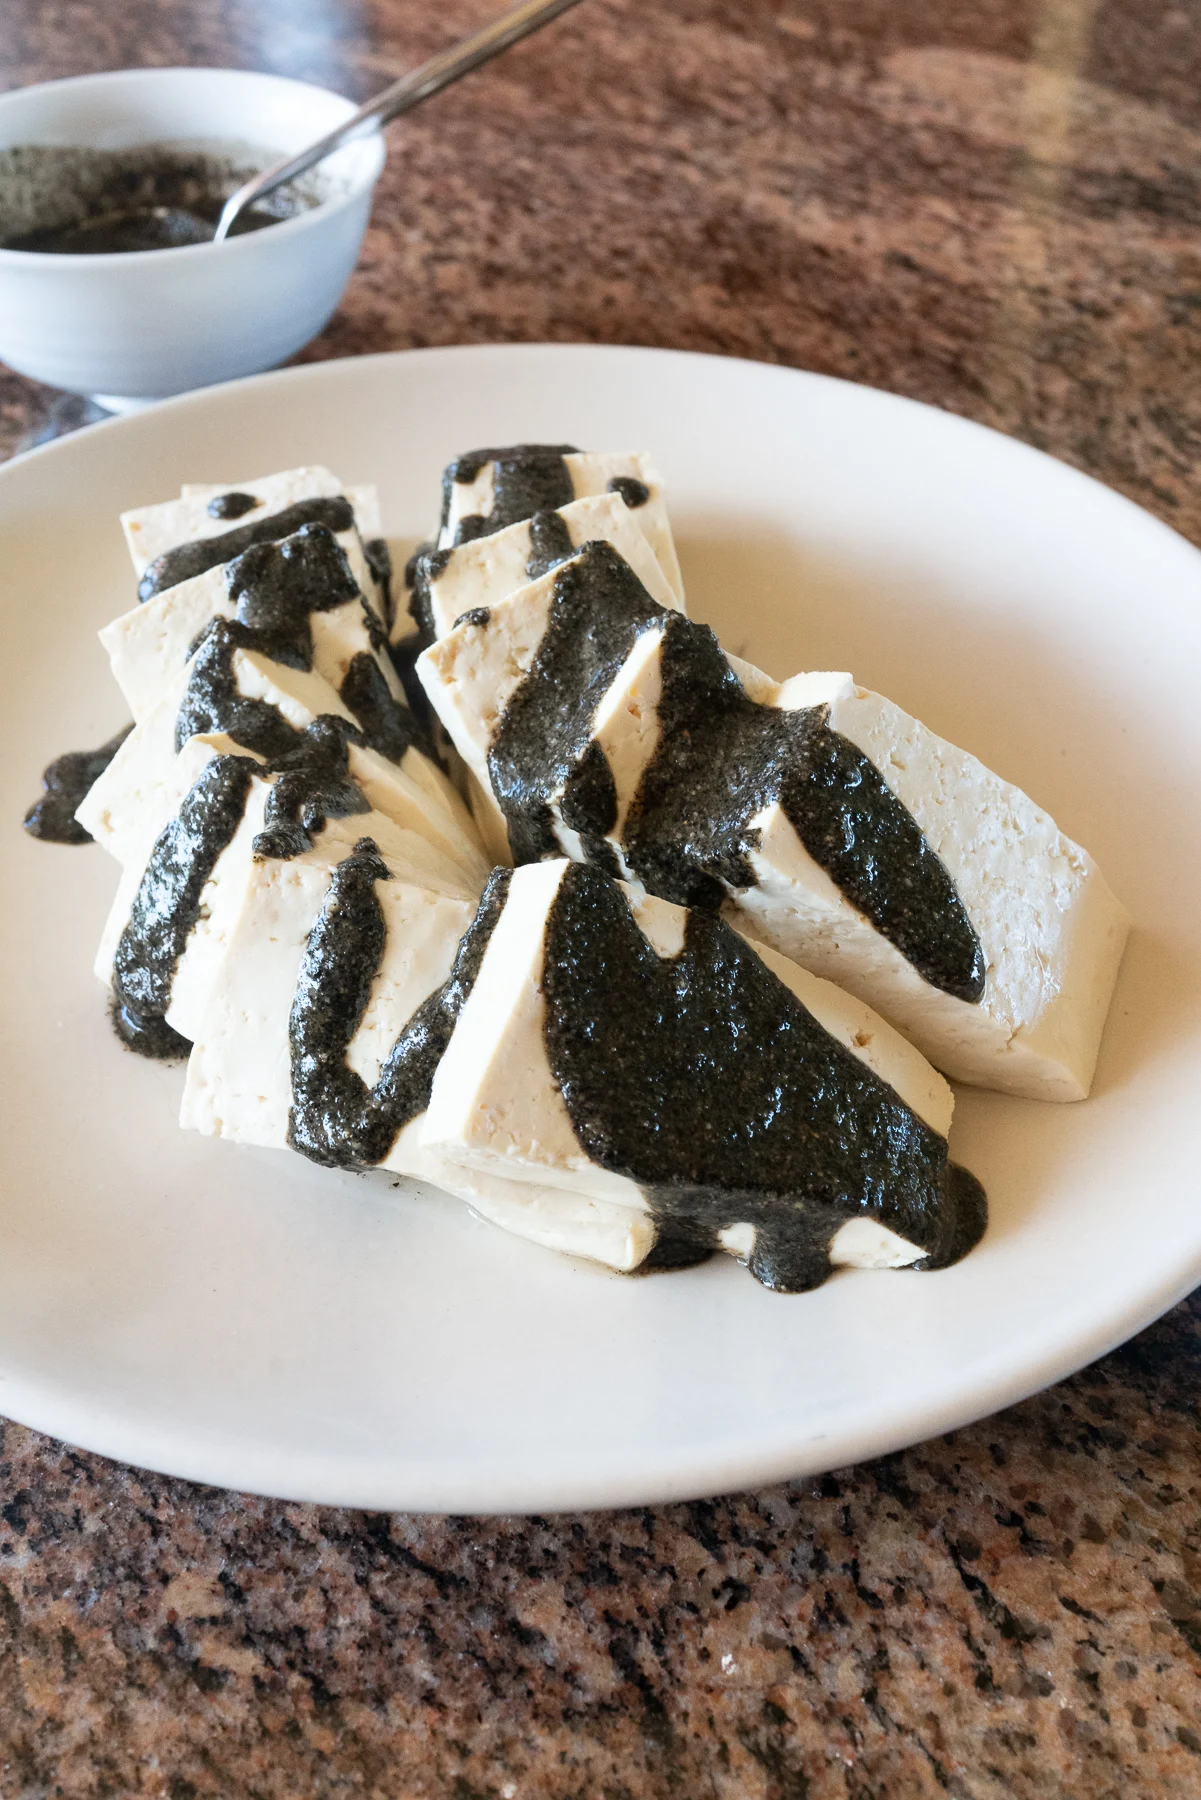 A prepared dish of Black Sesame Sauce On Steamed Tofu